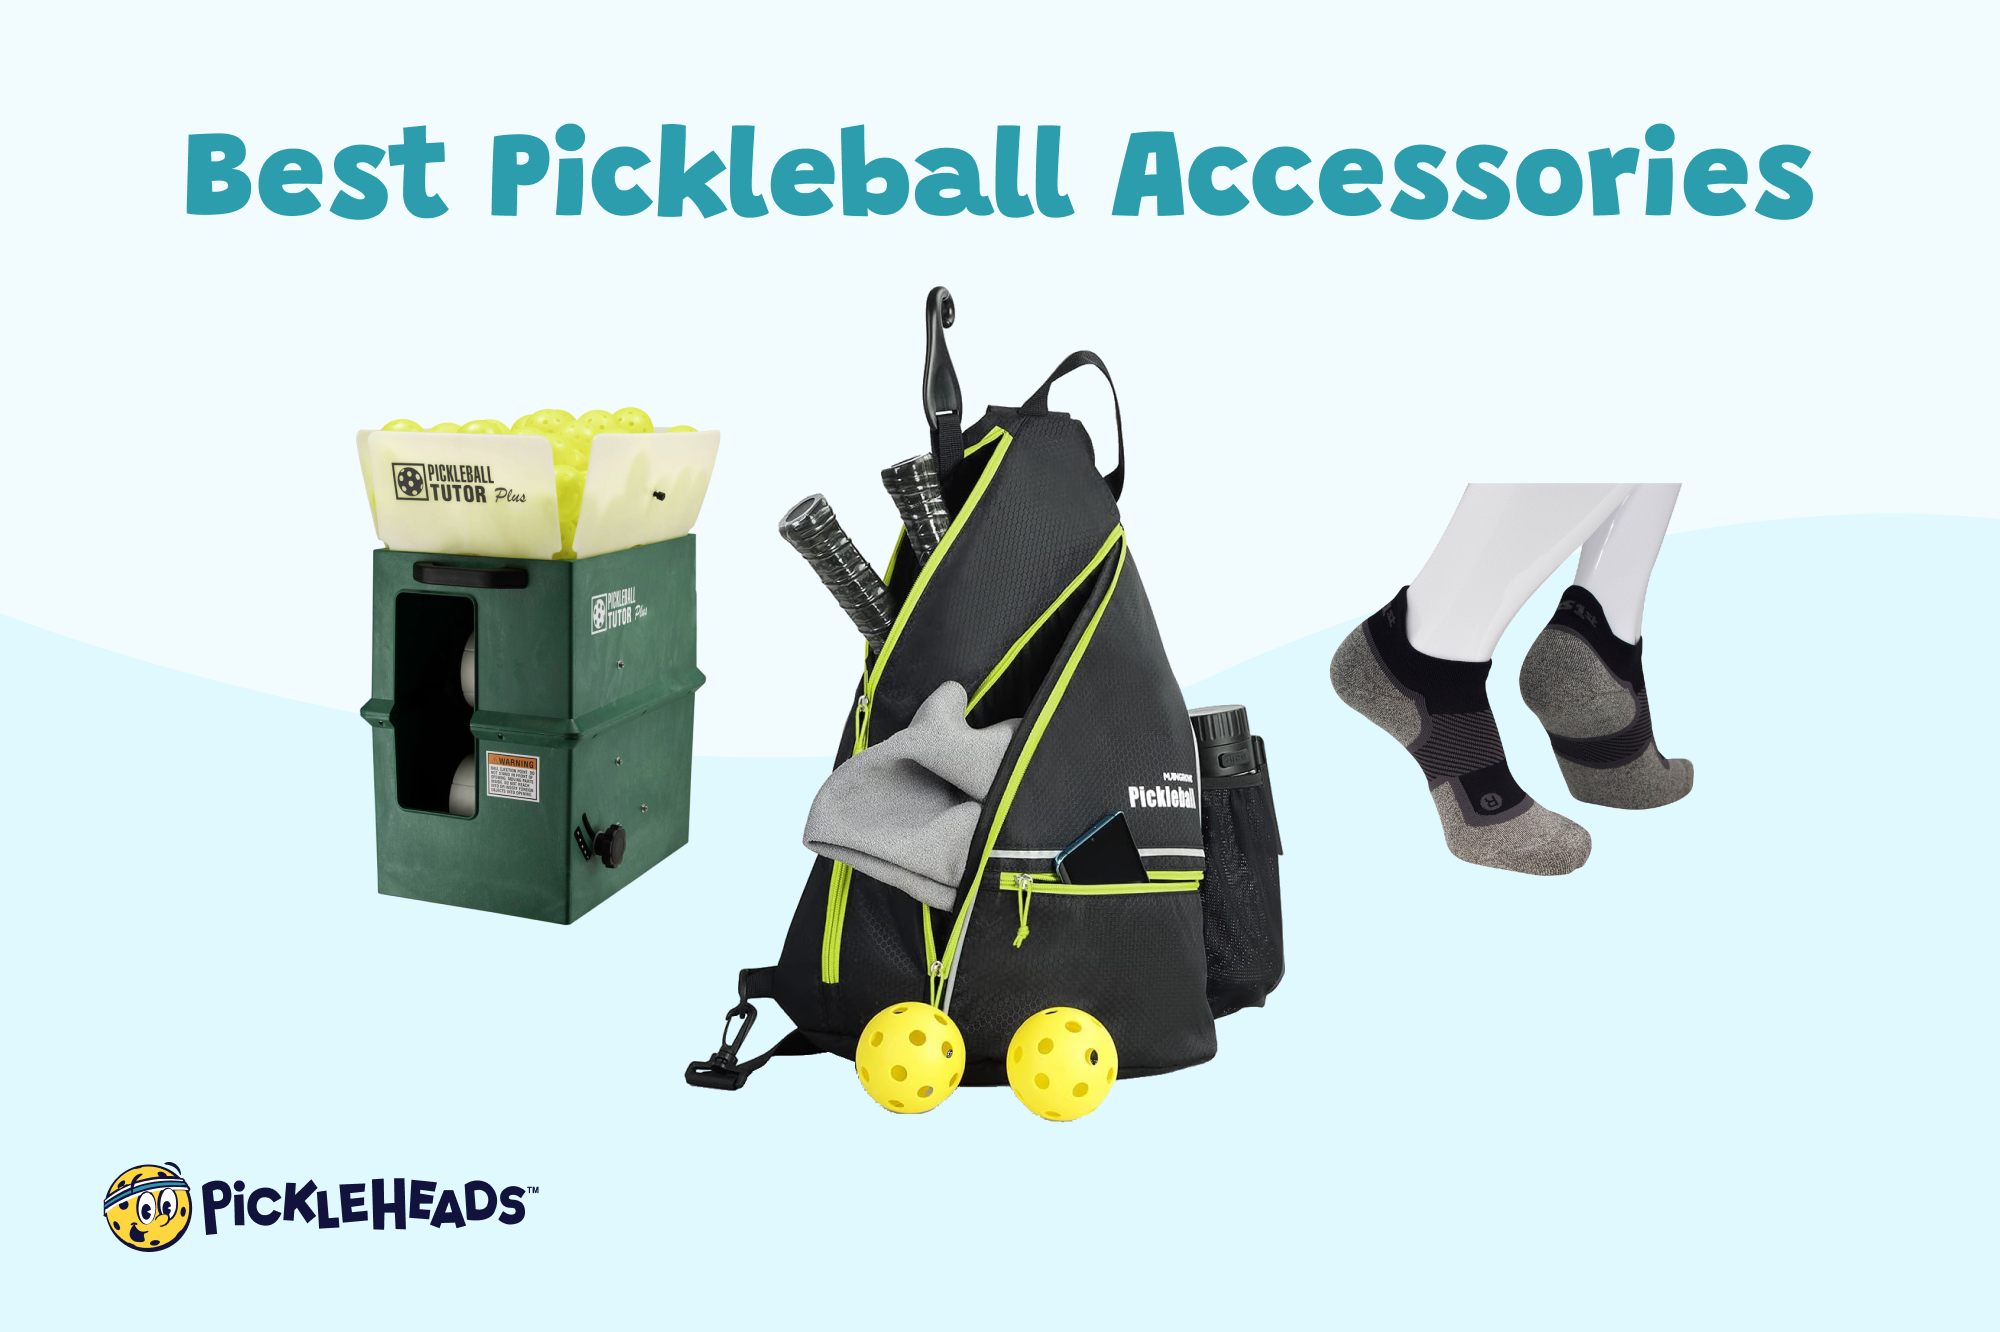 QOGIR Pickleball Ball Retriever: Easy Pickleball Ball Accessory to